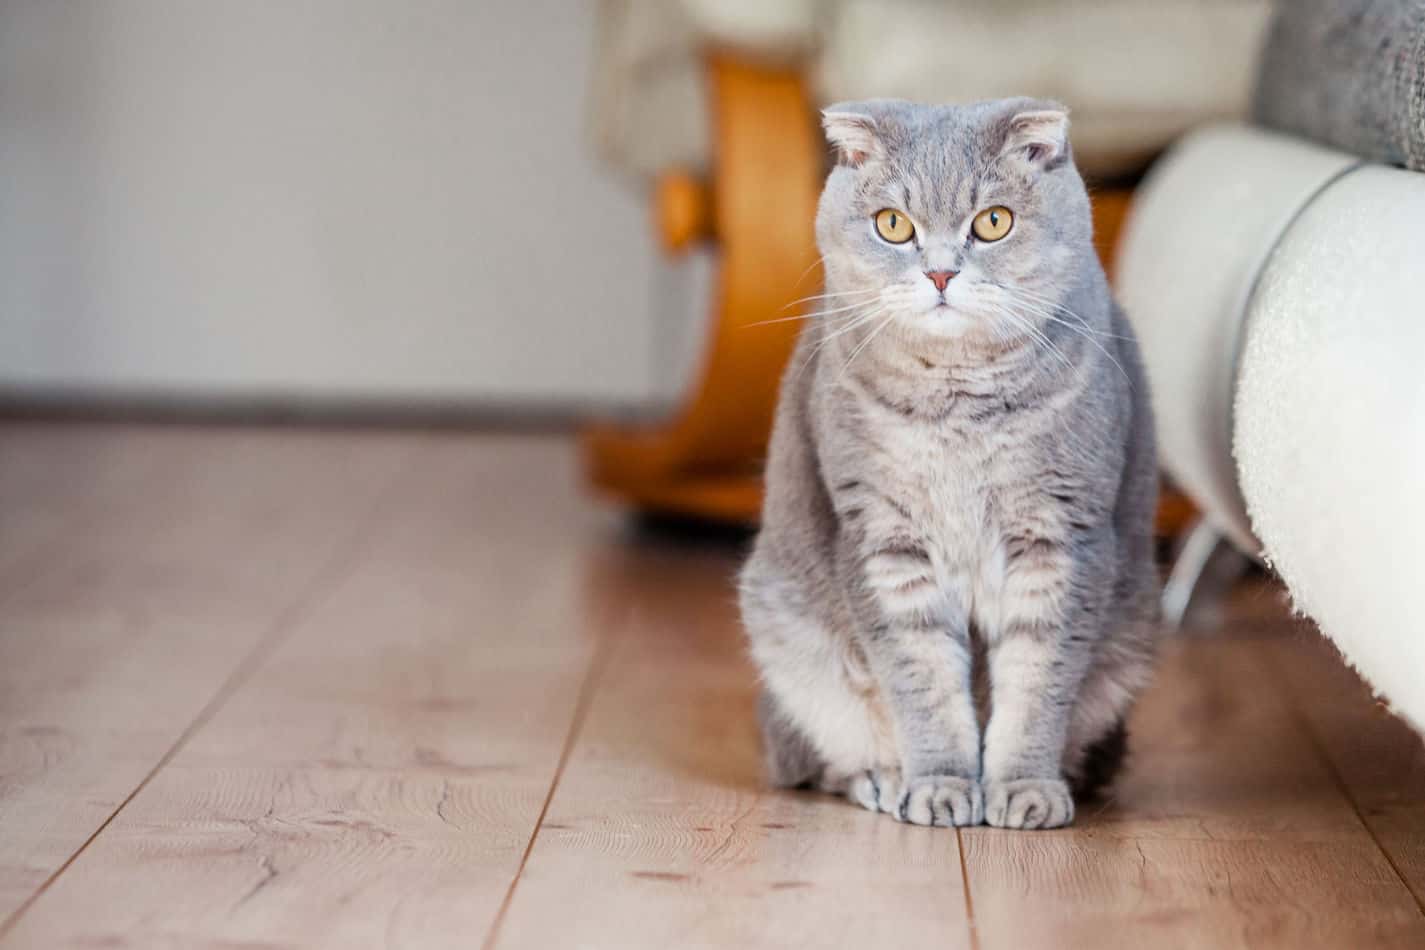 do cat claws scratch hardwood floors